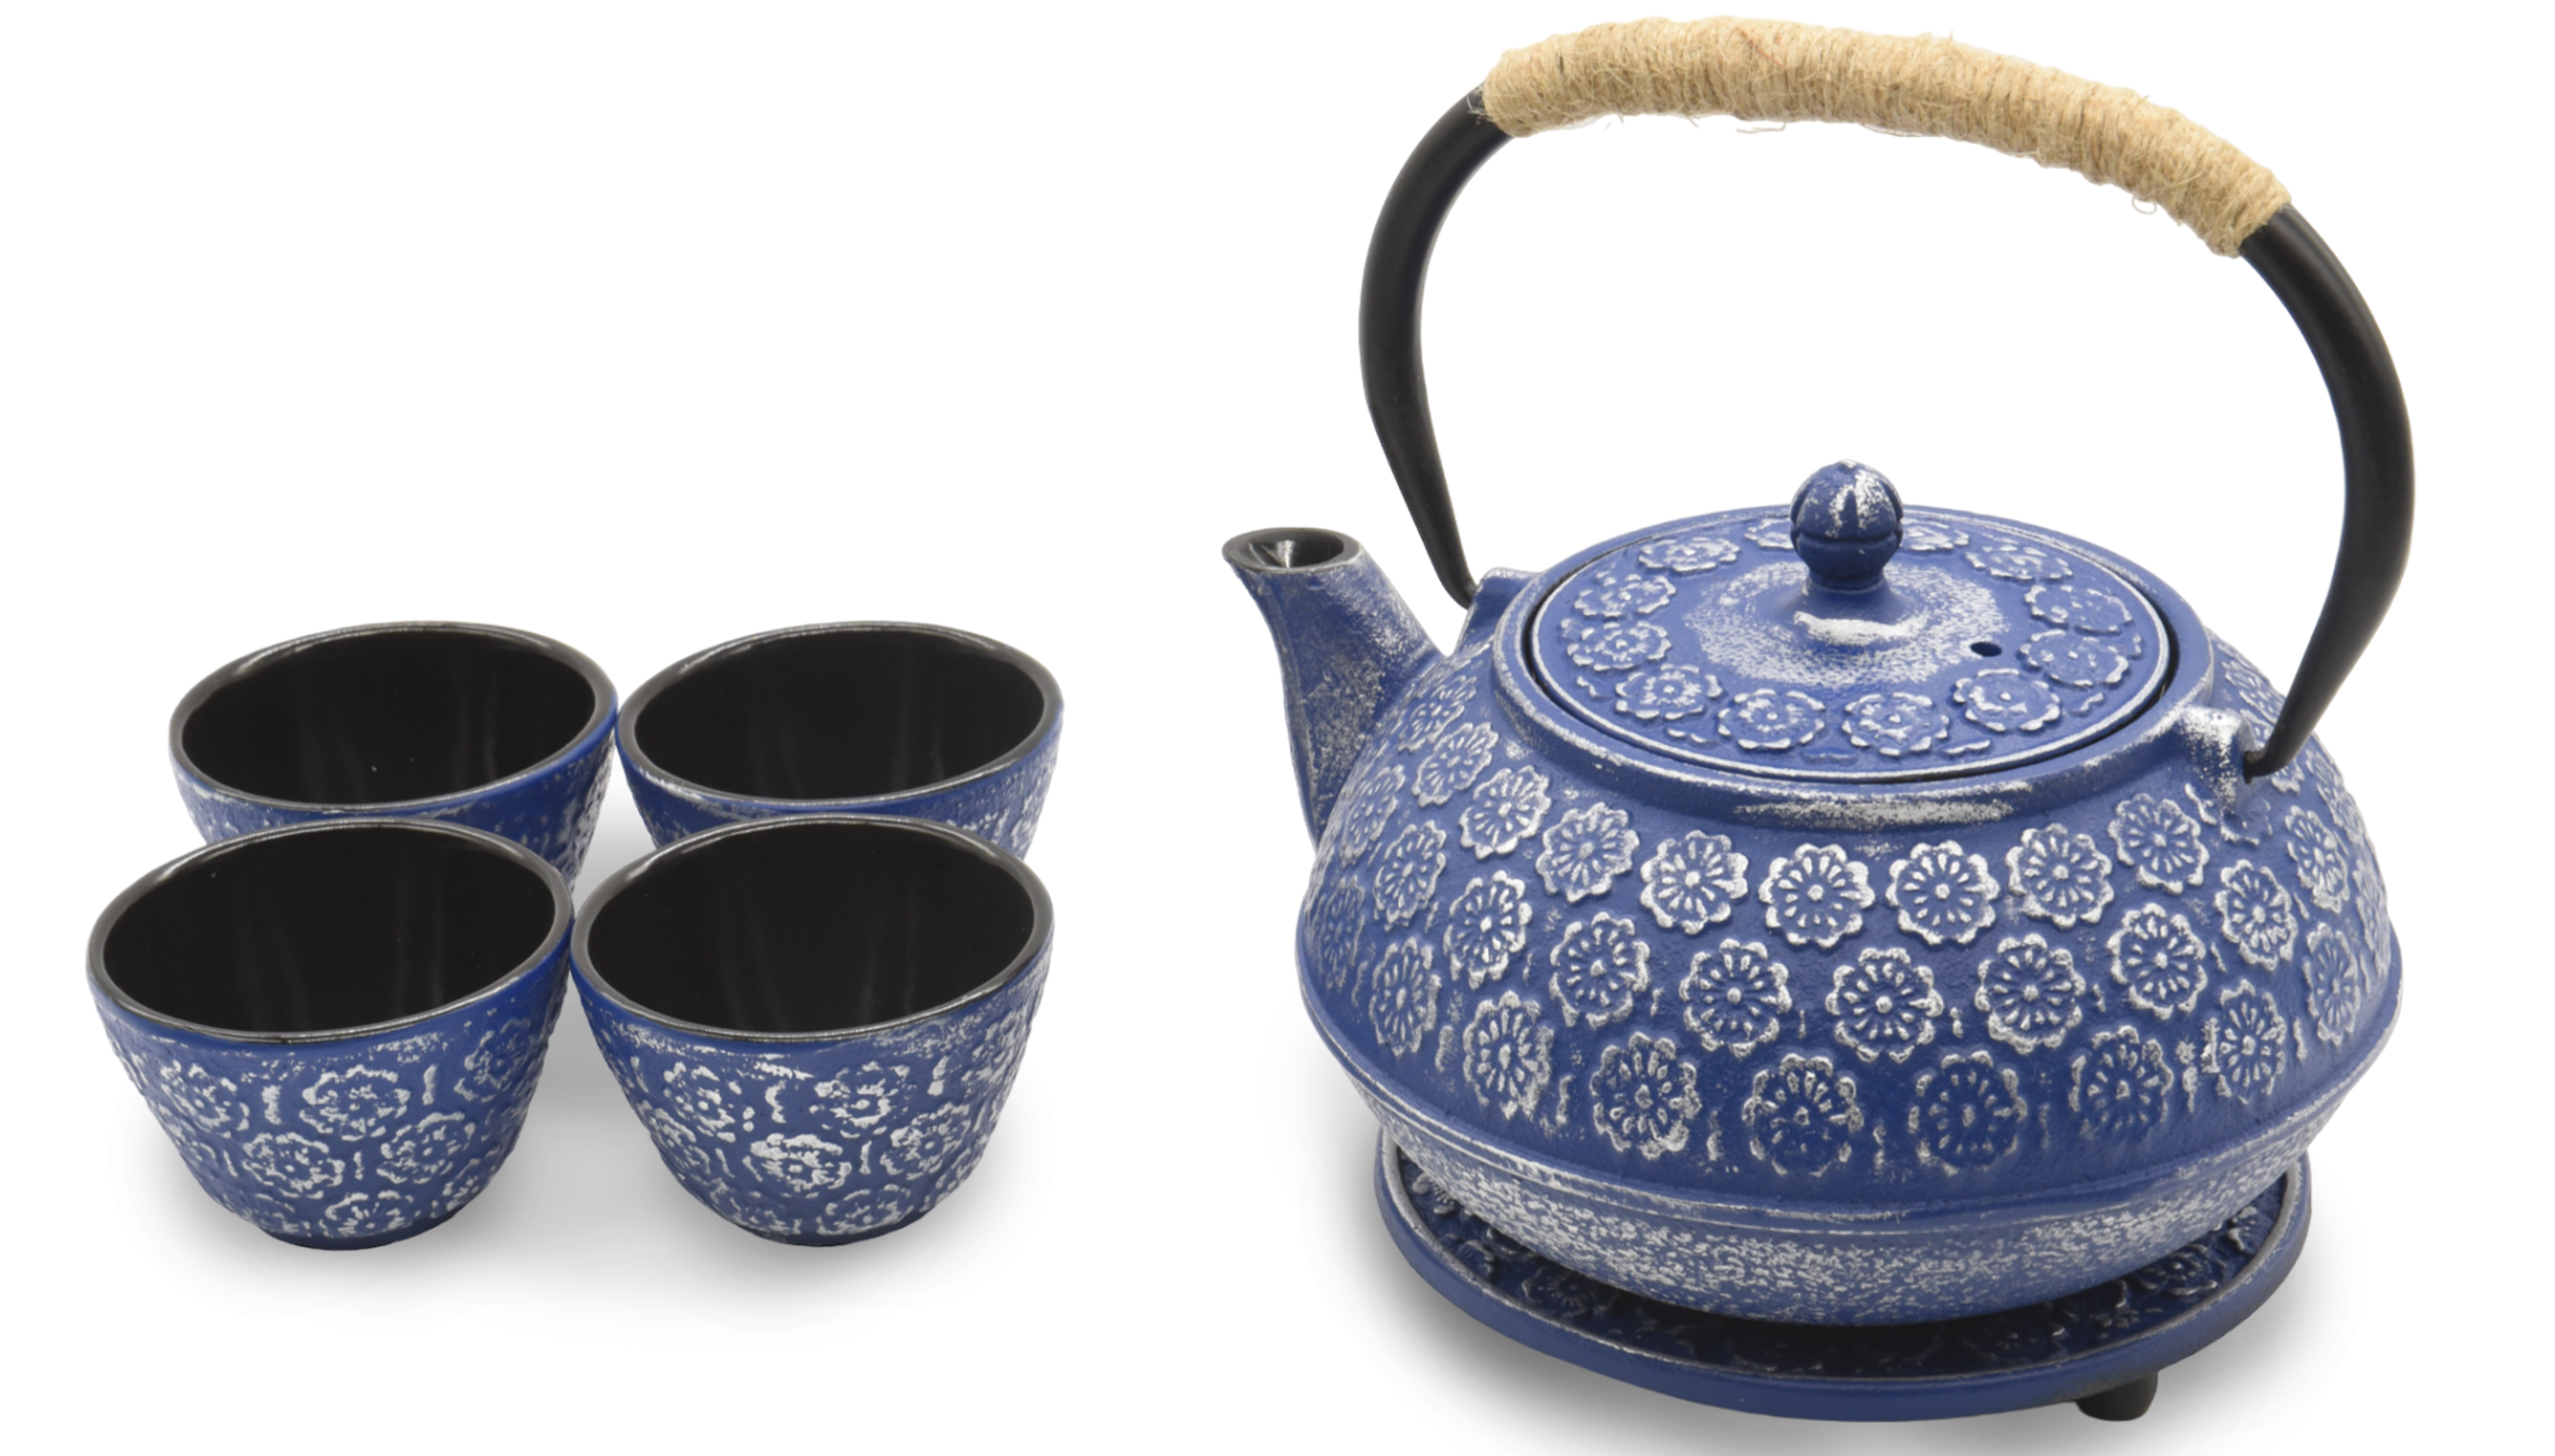 1.0 Liter Enamel Coated Cast Iron Sakura Blossom Teapot Set with 4 Cup